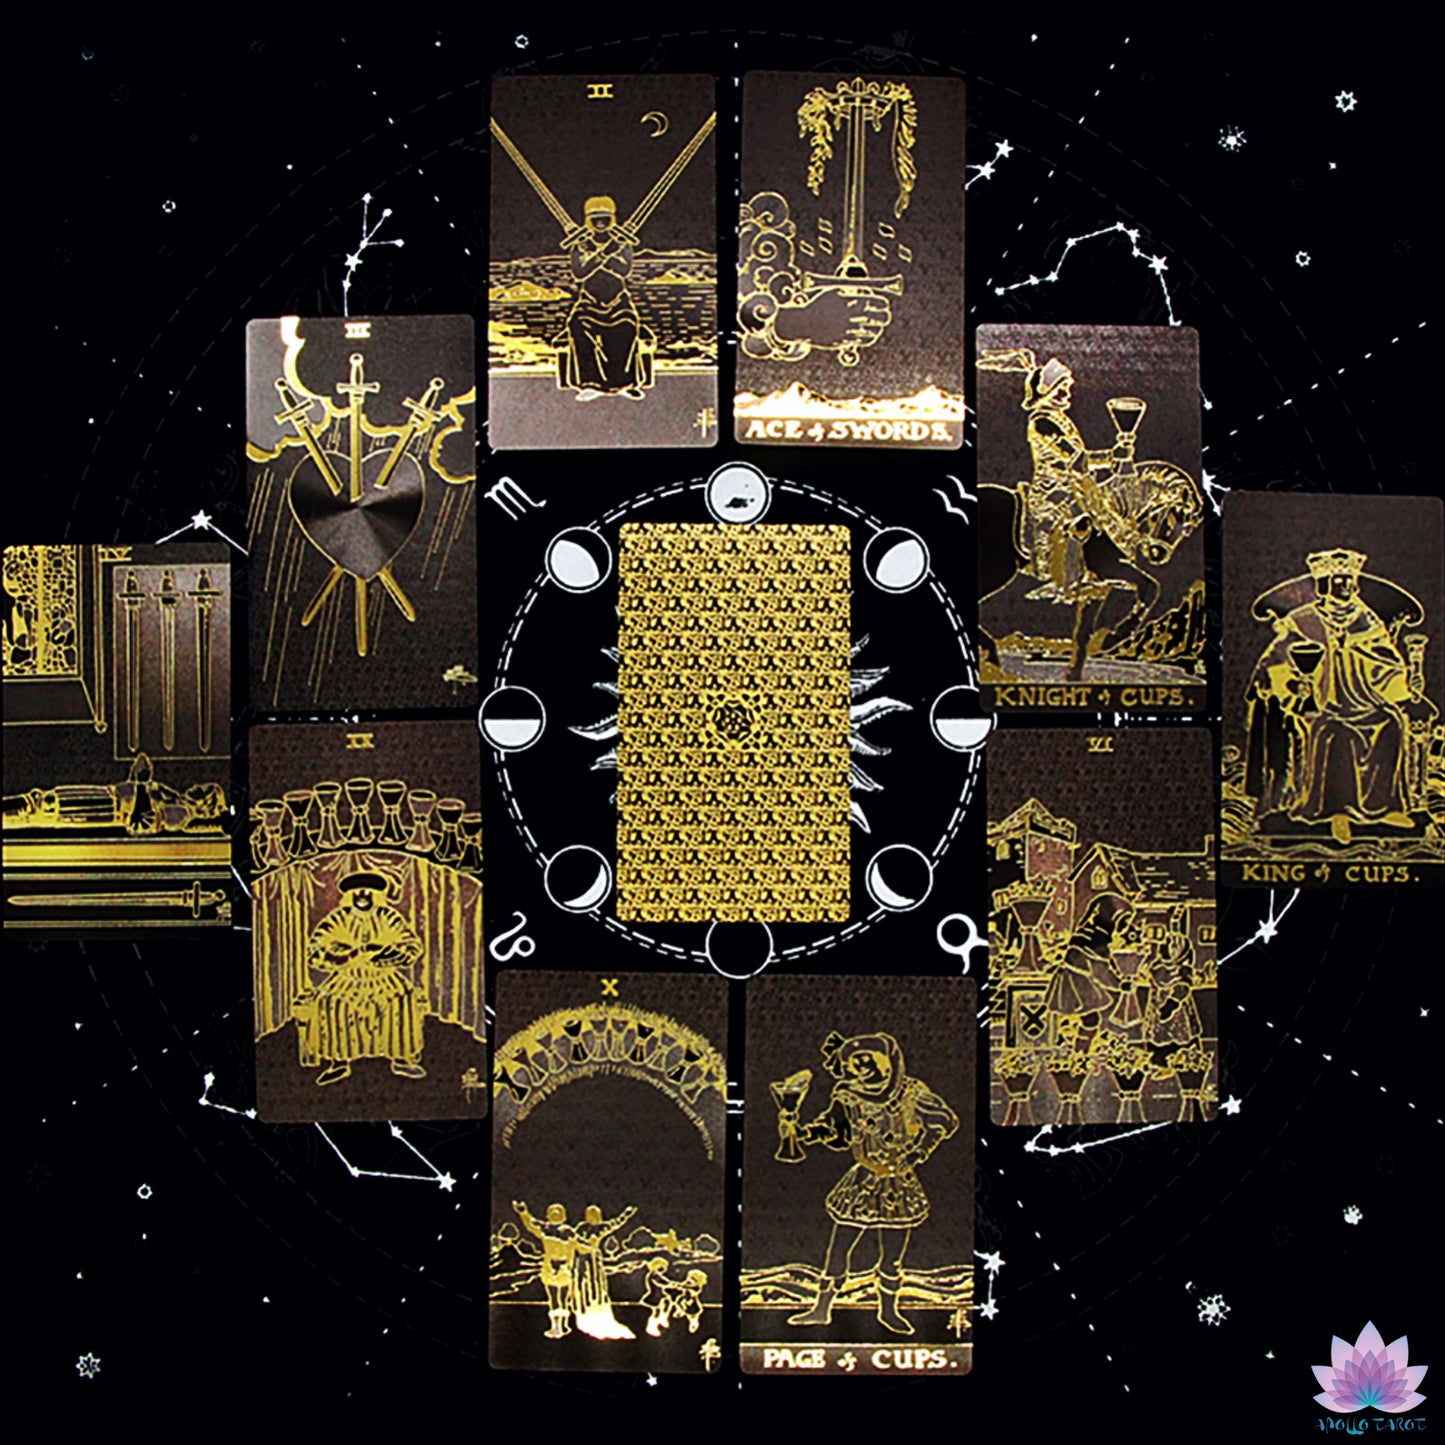 Black & Gold Foil Tarot Deck | Rider-Waite-Smith Remastered Cards For Beginner Tarot Readers | Premium Gift Box With English Guidebook | Apollo Tarot